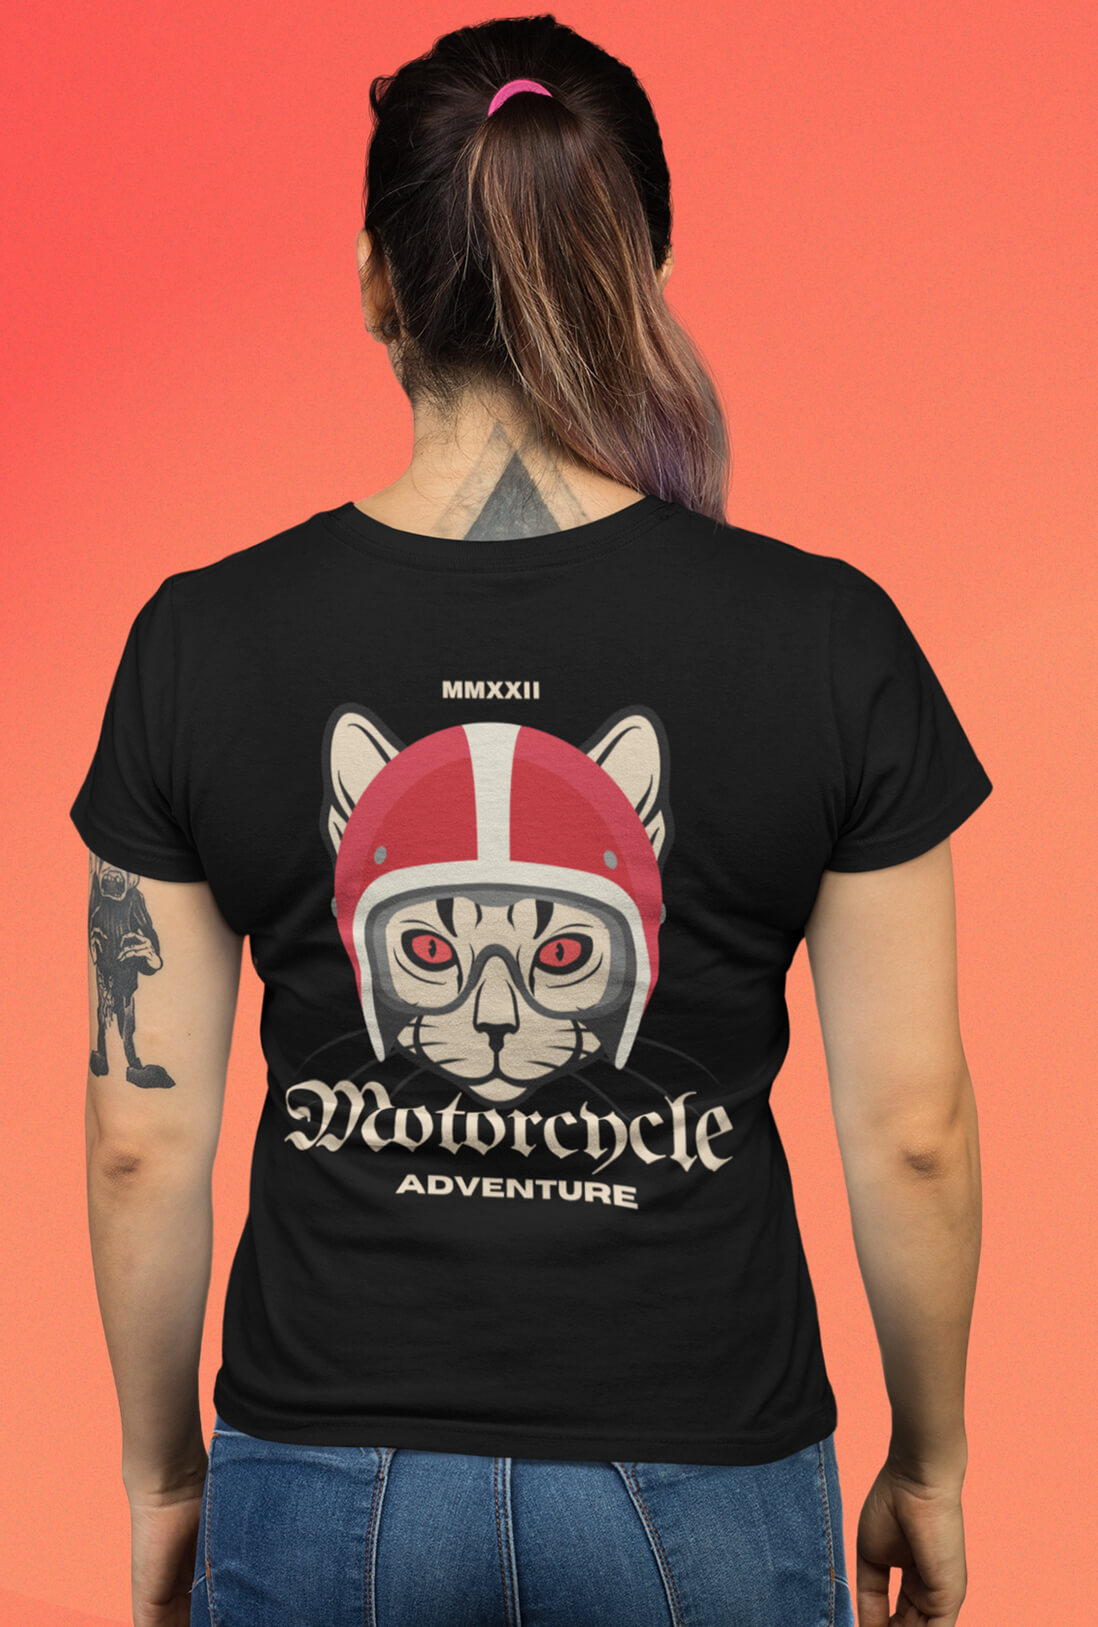 Motorcycle Women's Back Printed T-Shirt